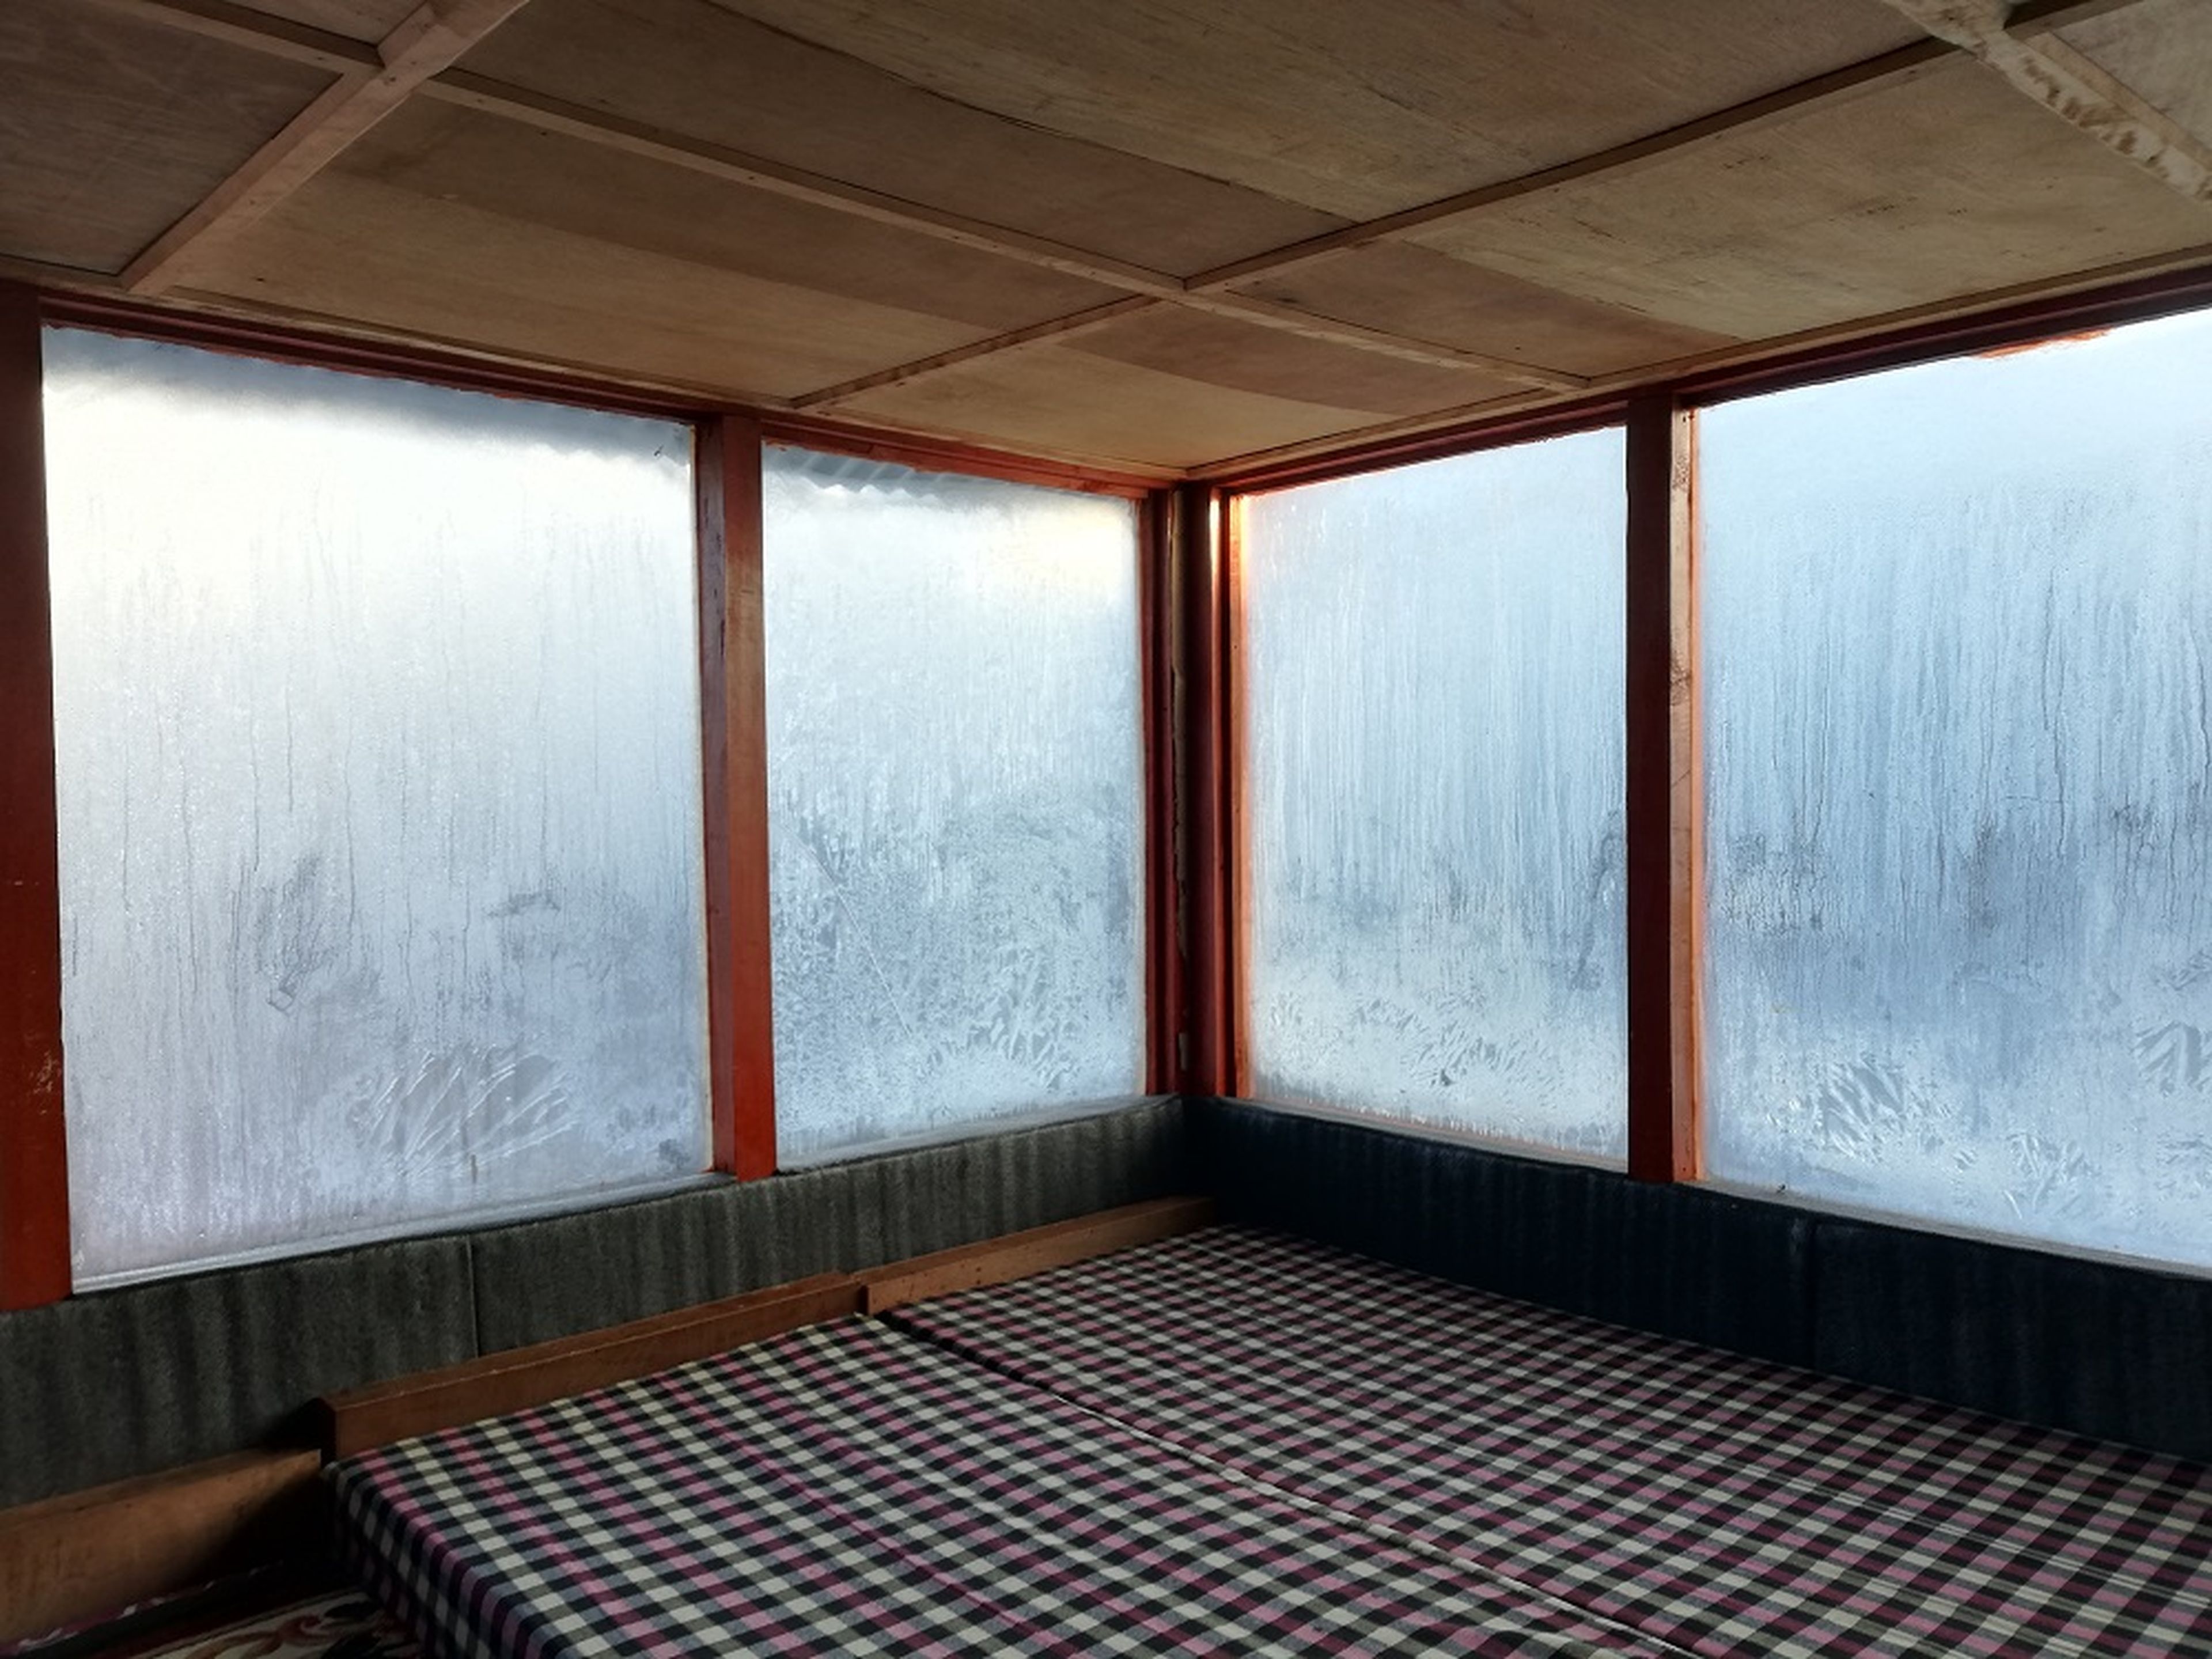 ventanas congeladas en high camp